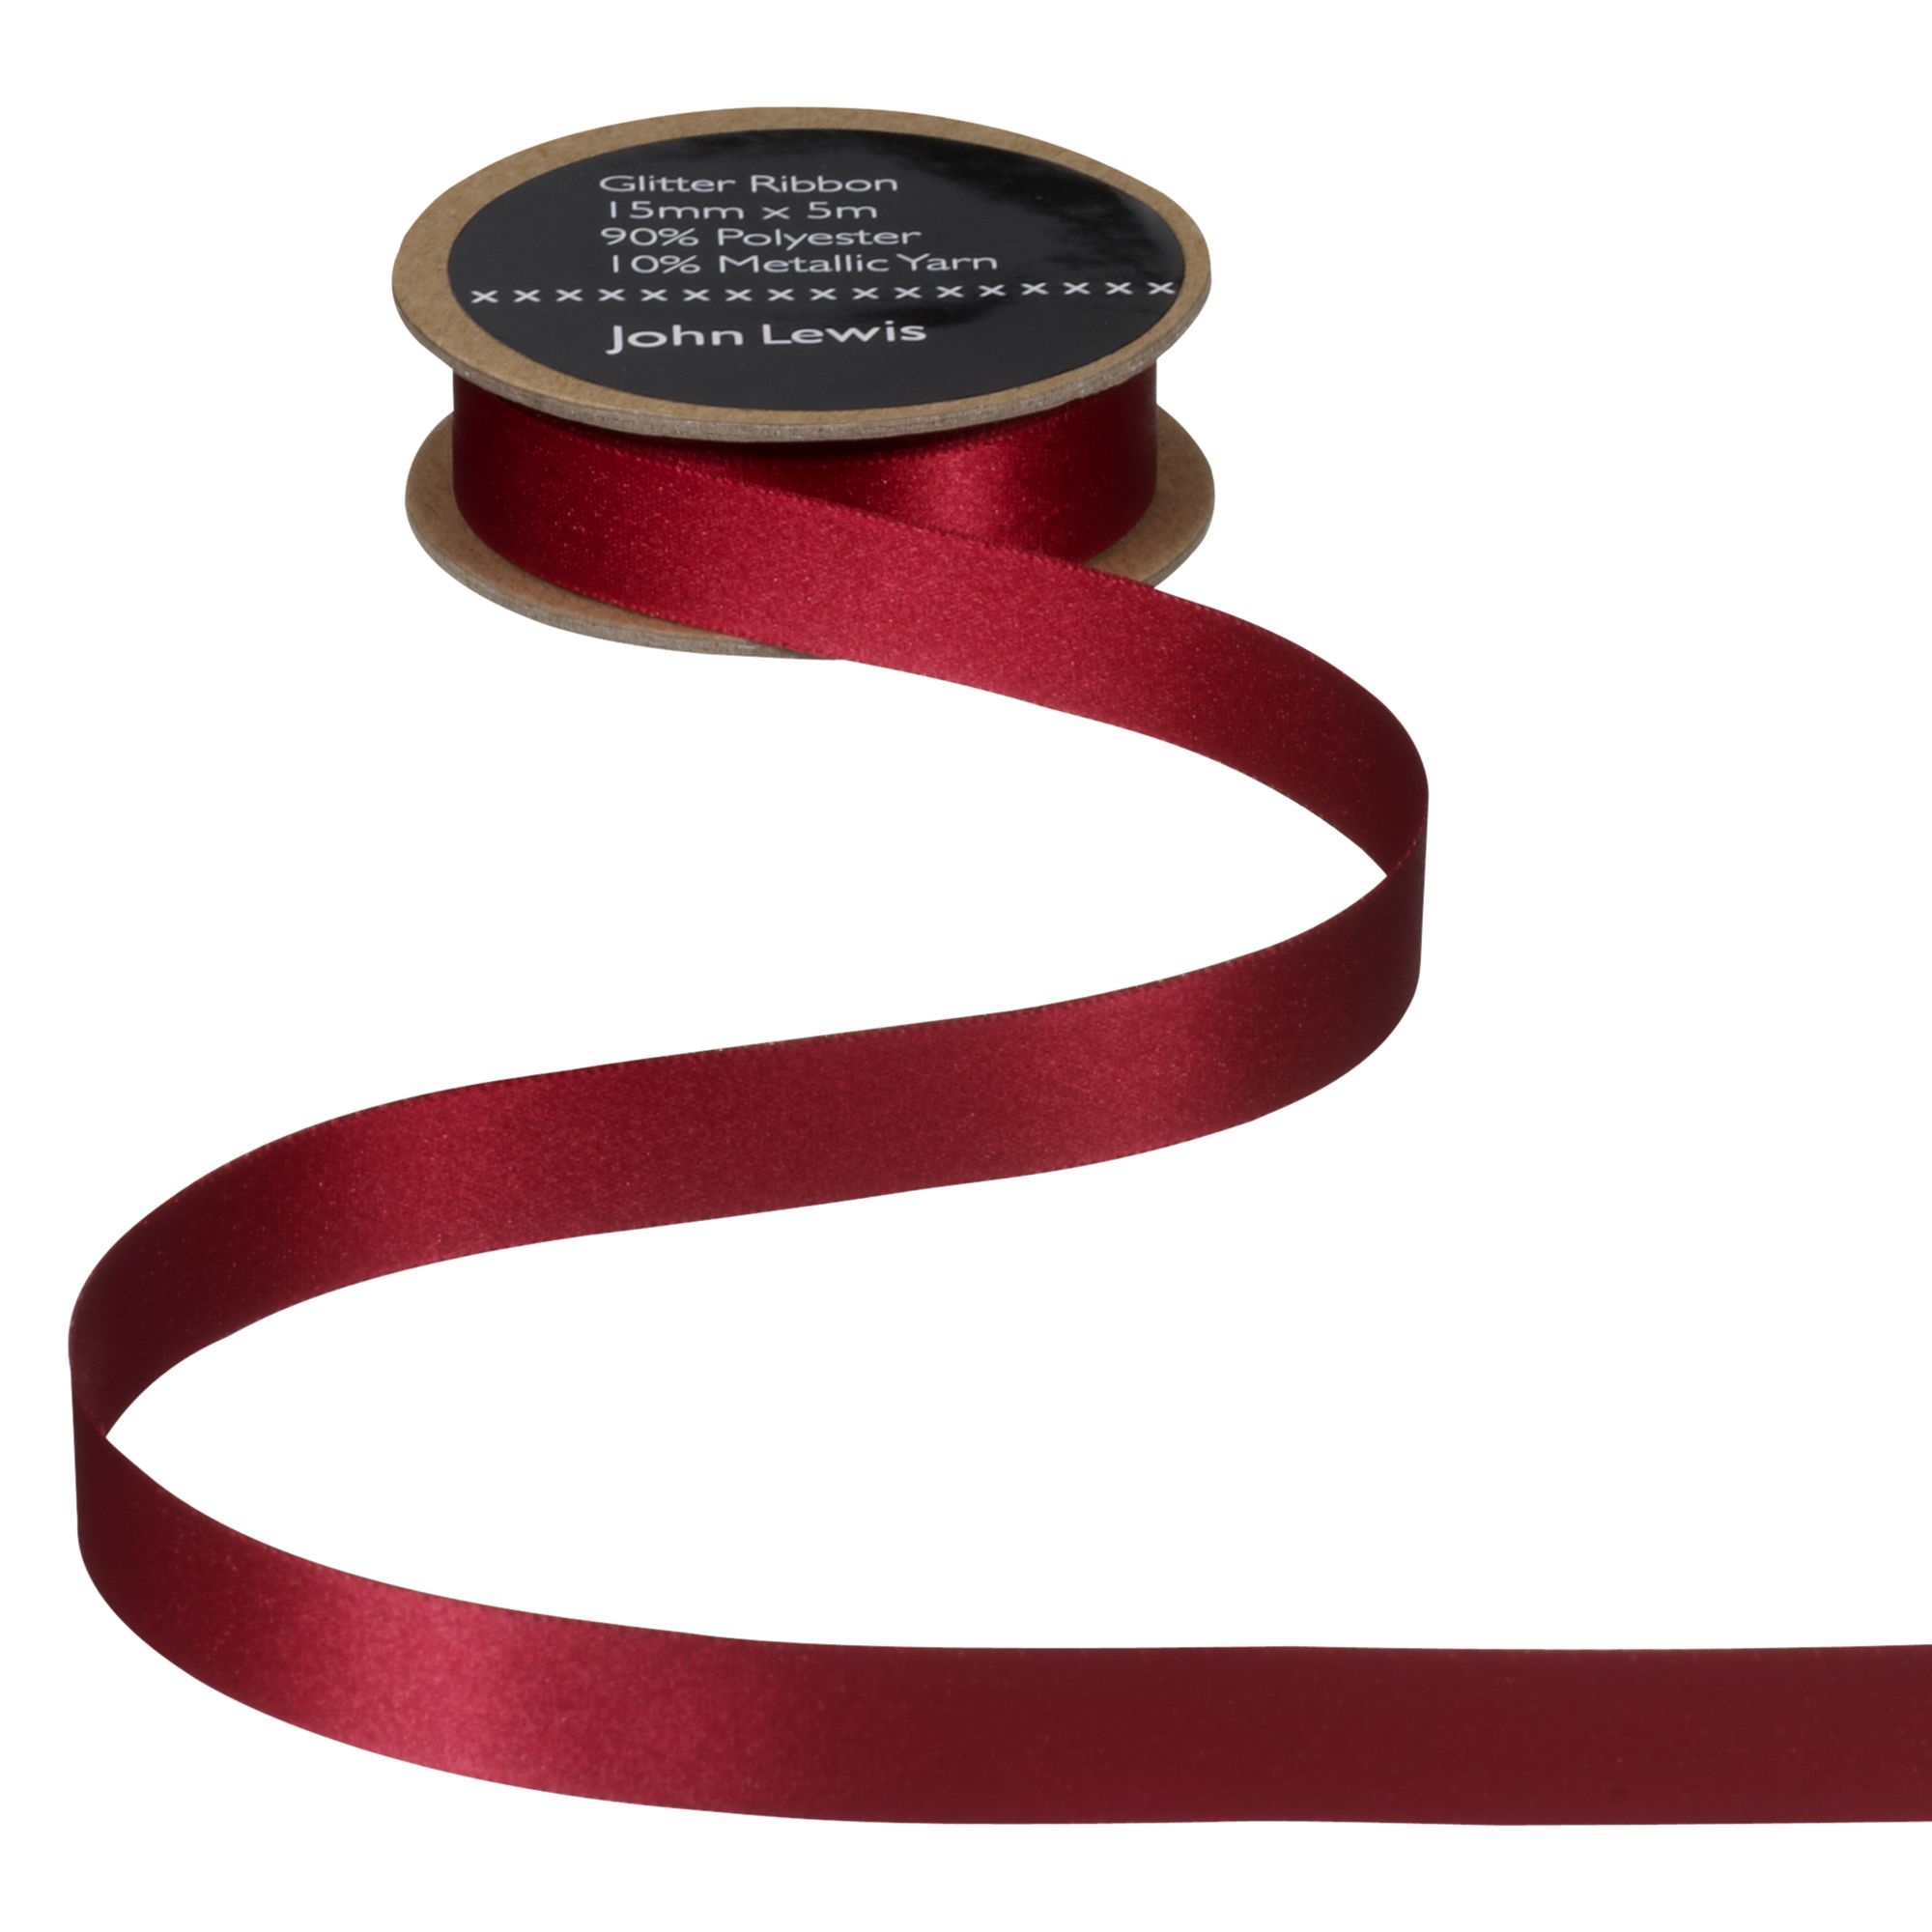 John Lewis Glitter Ribbon, Scarlet, 15mm